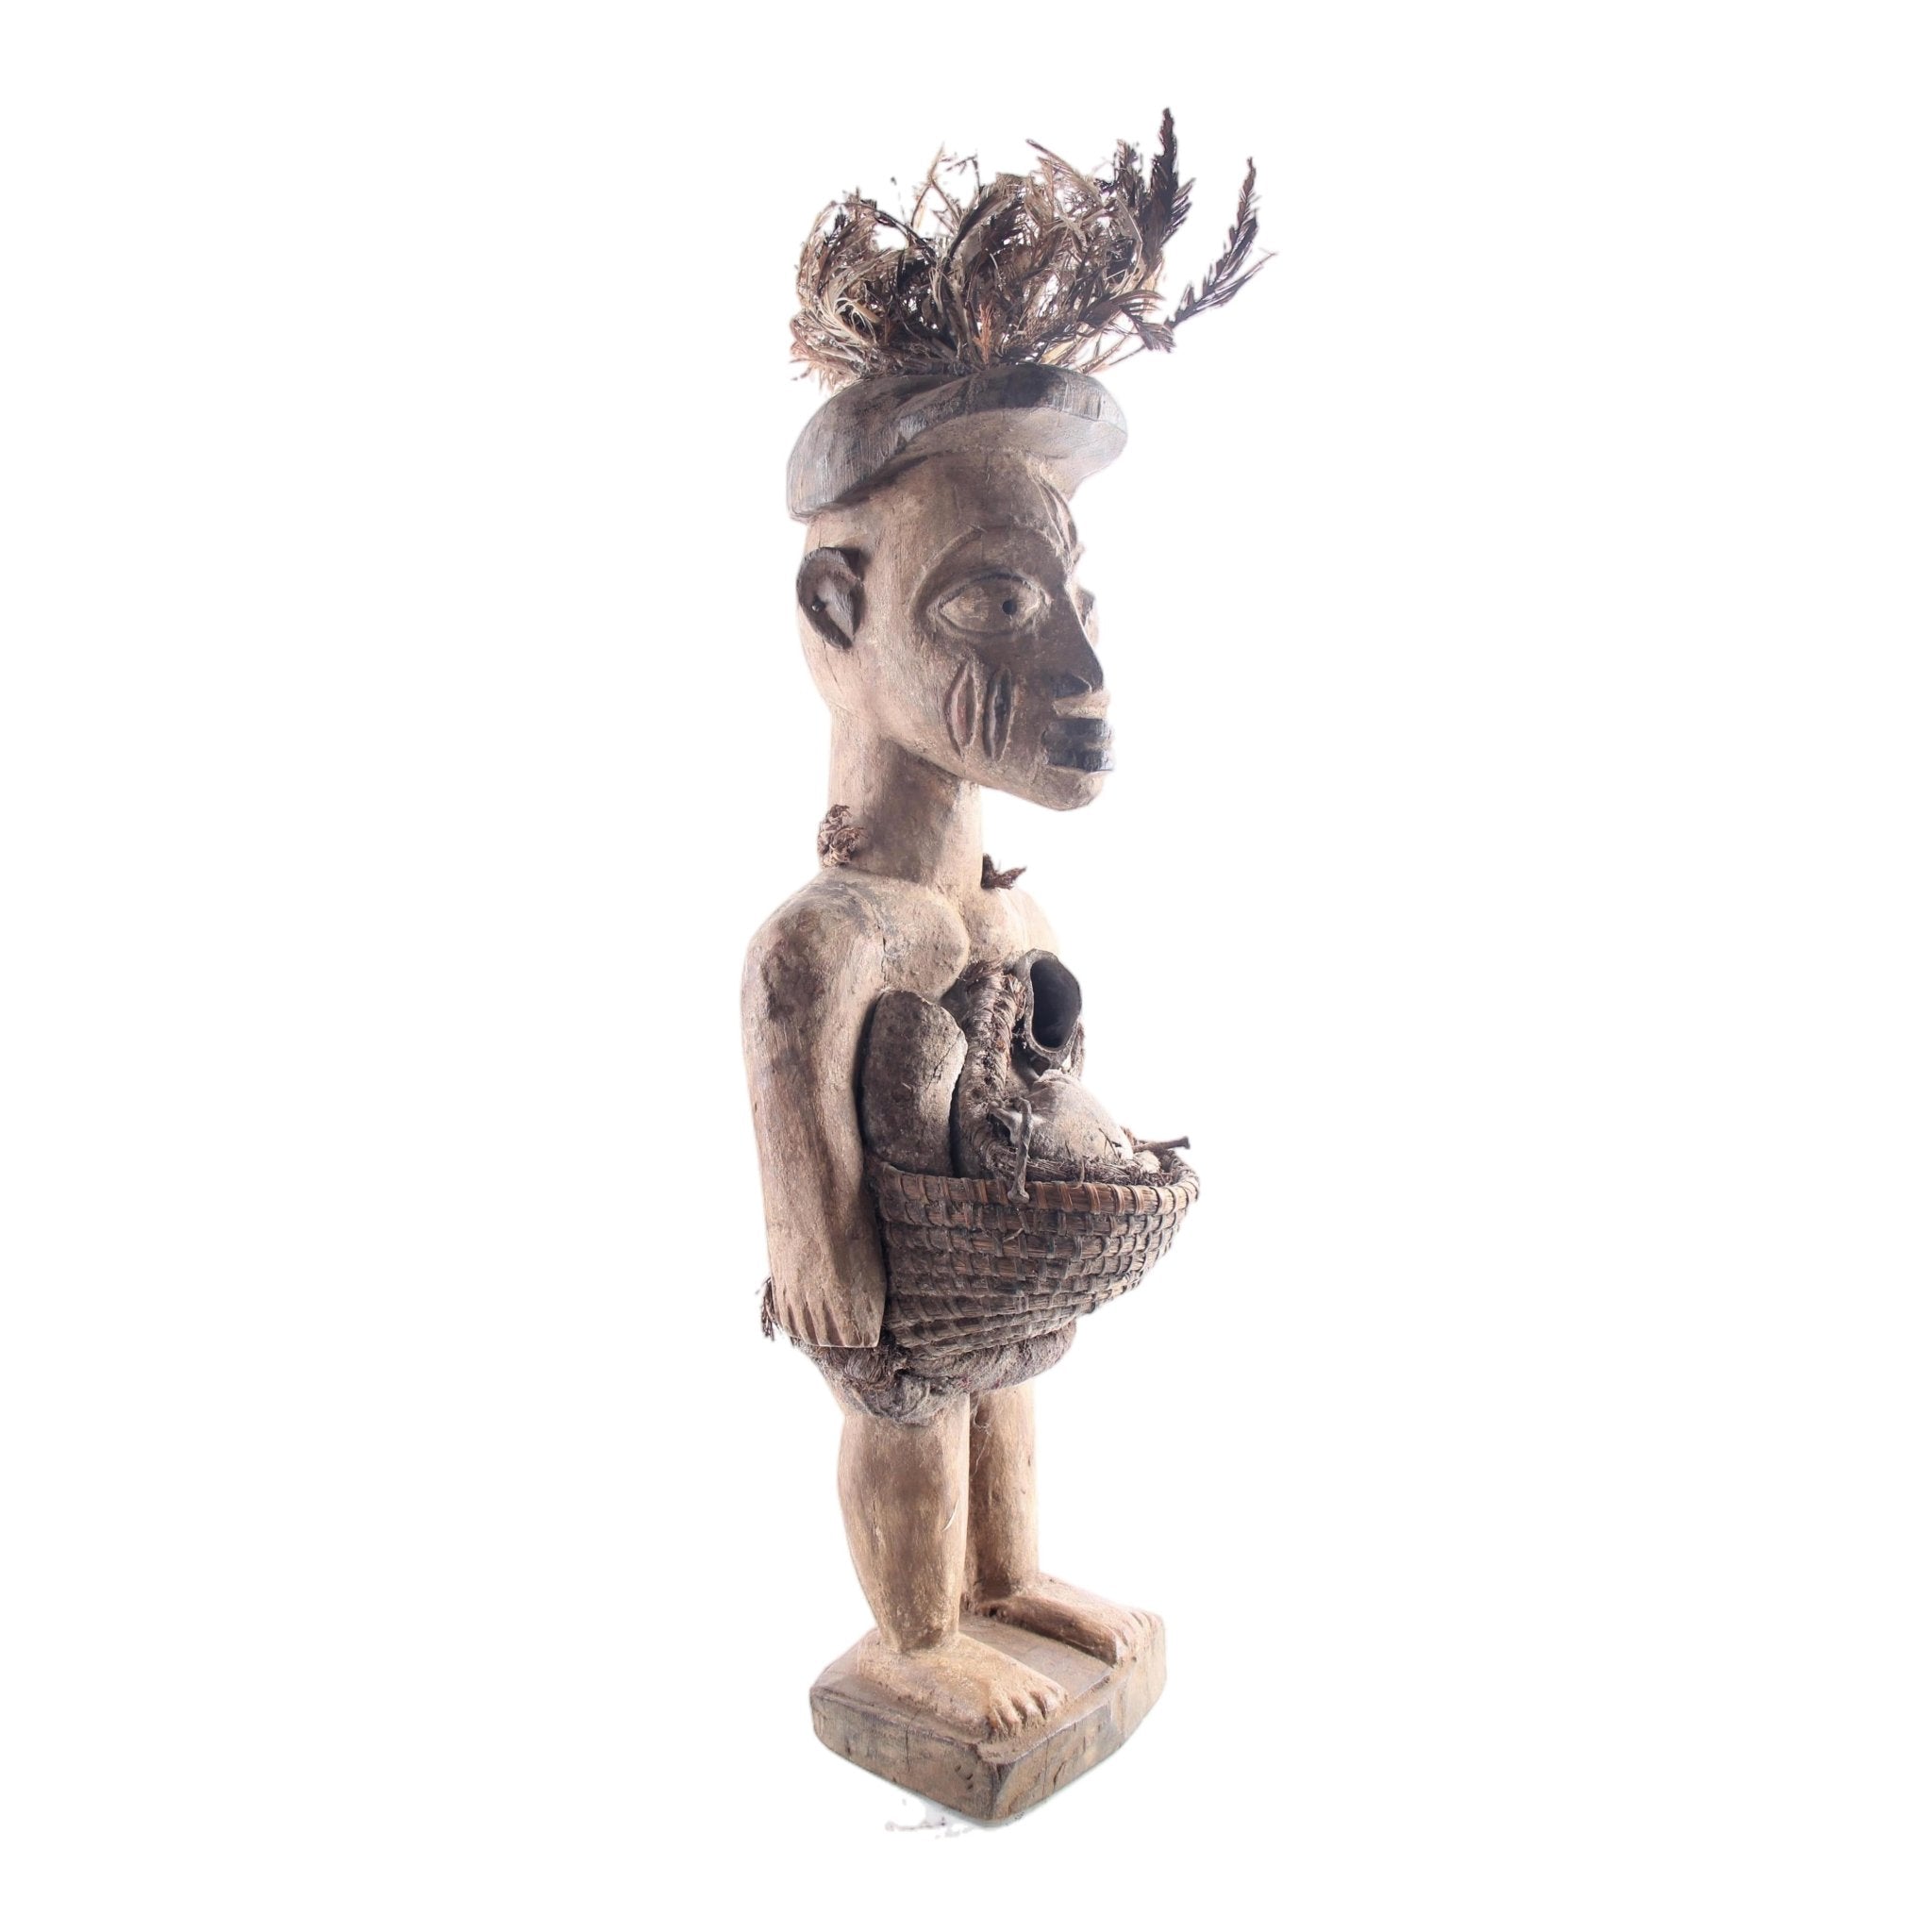 Basonge/Songye Tribe Figurine ~28.7" Tall - African Angel Art - Figurine